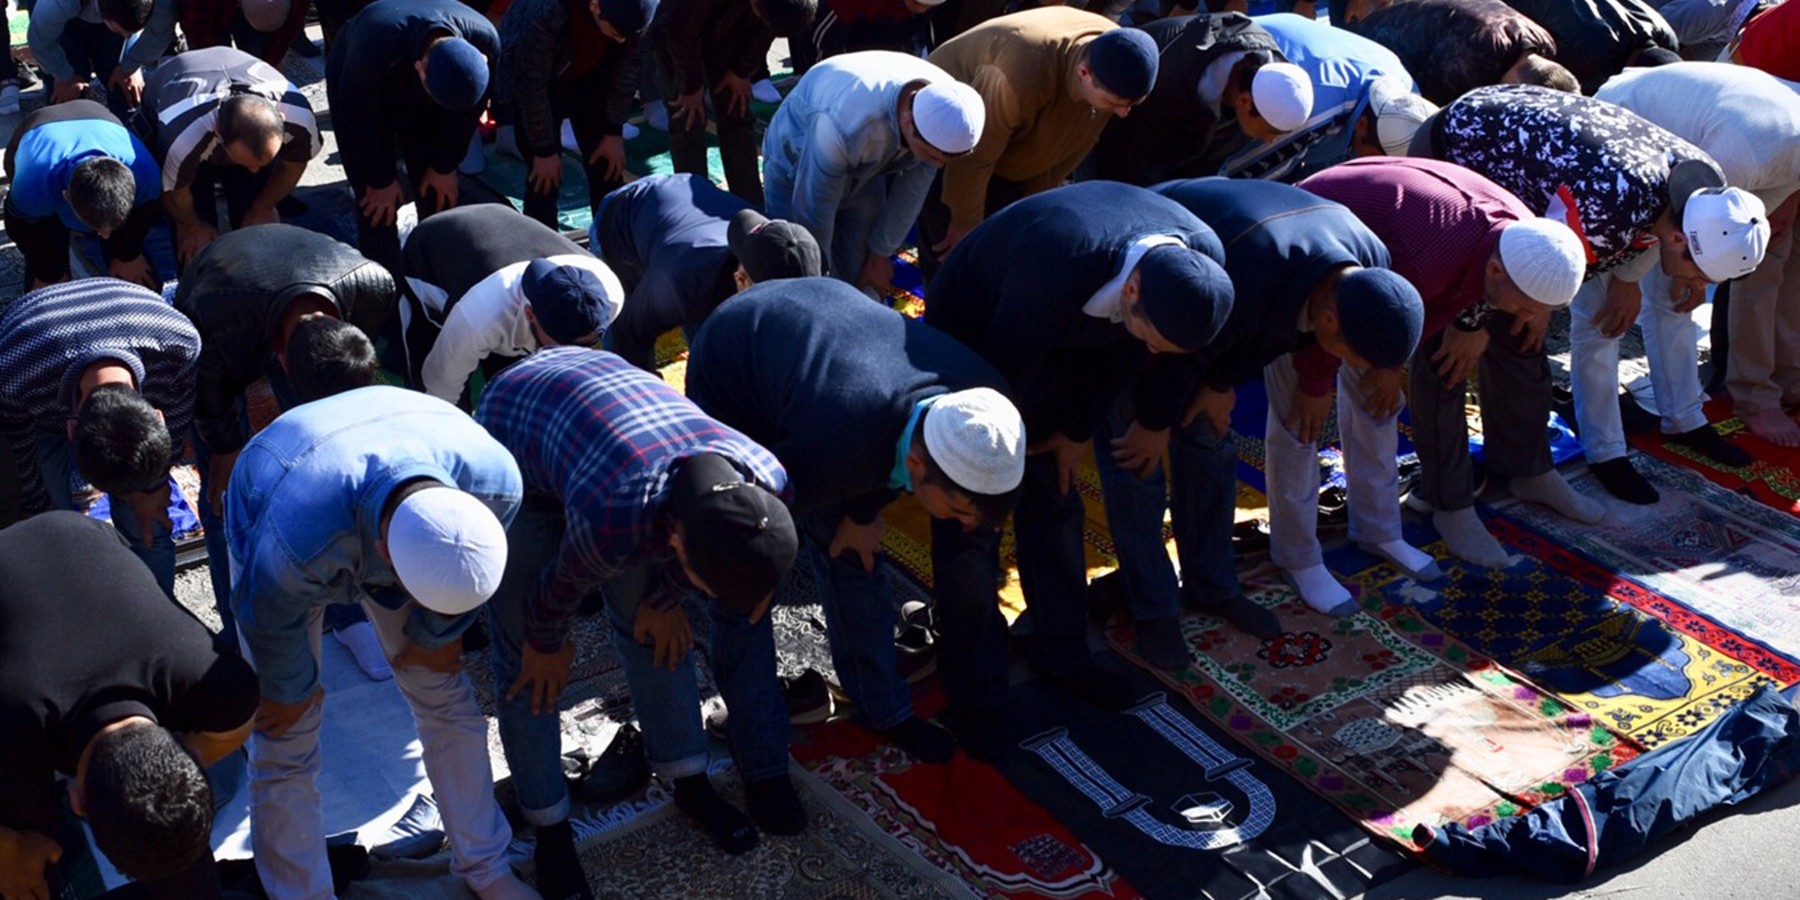 Узбекистан мусульманская. Намаз. Узбекские мусульмане. Мусульманин. Мусульманин молится.